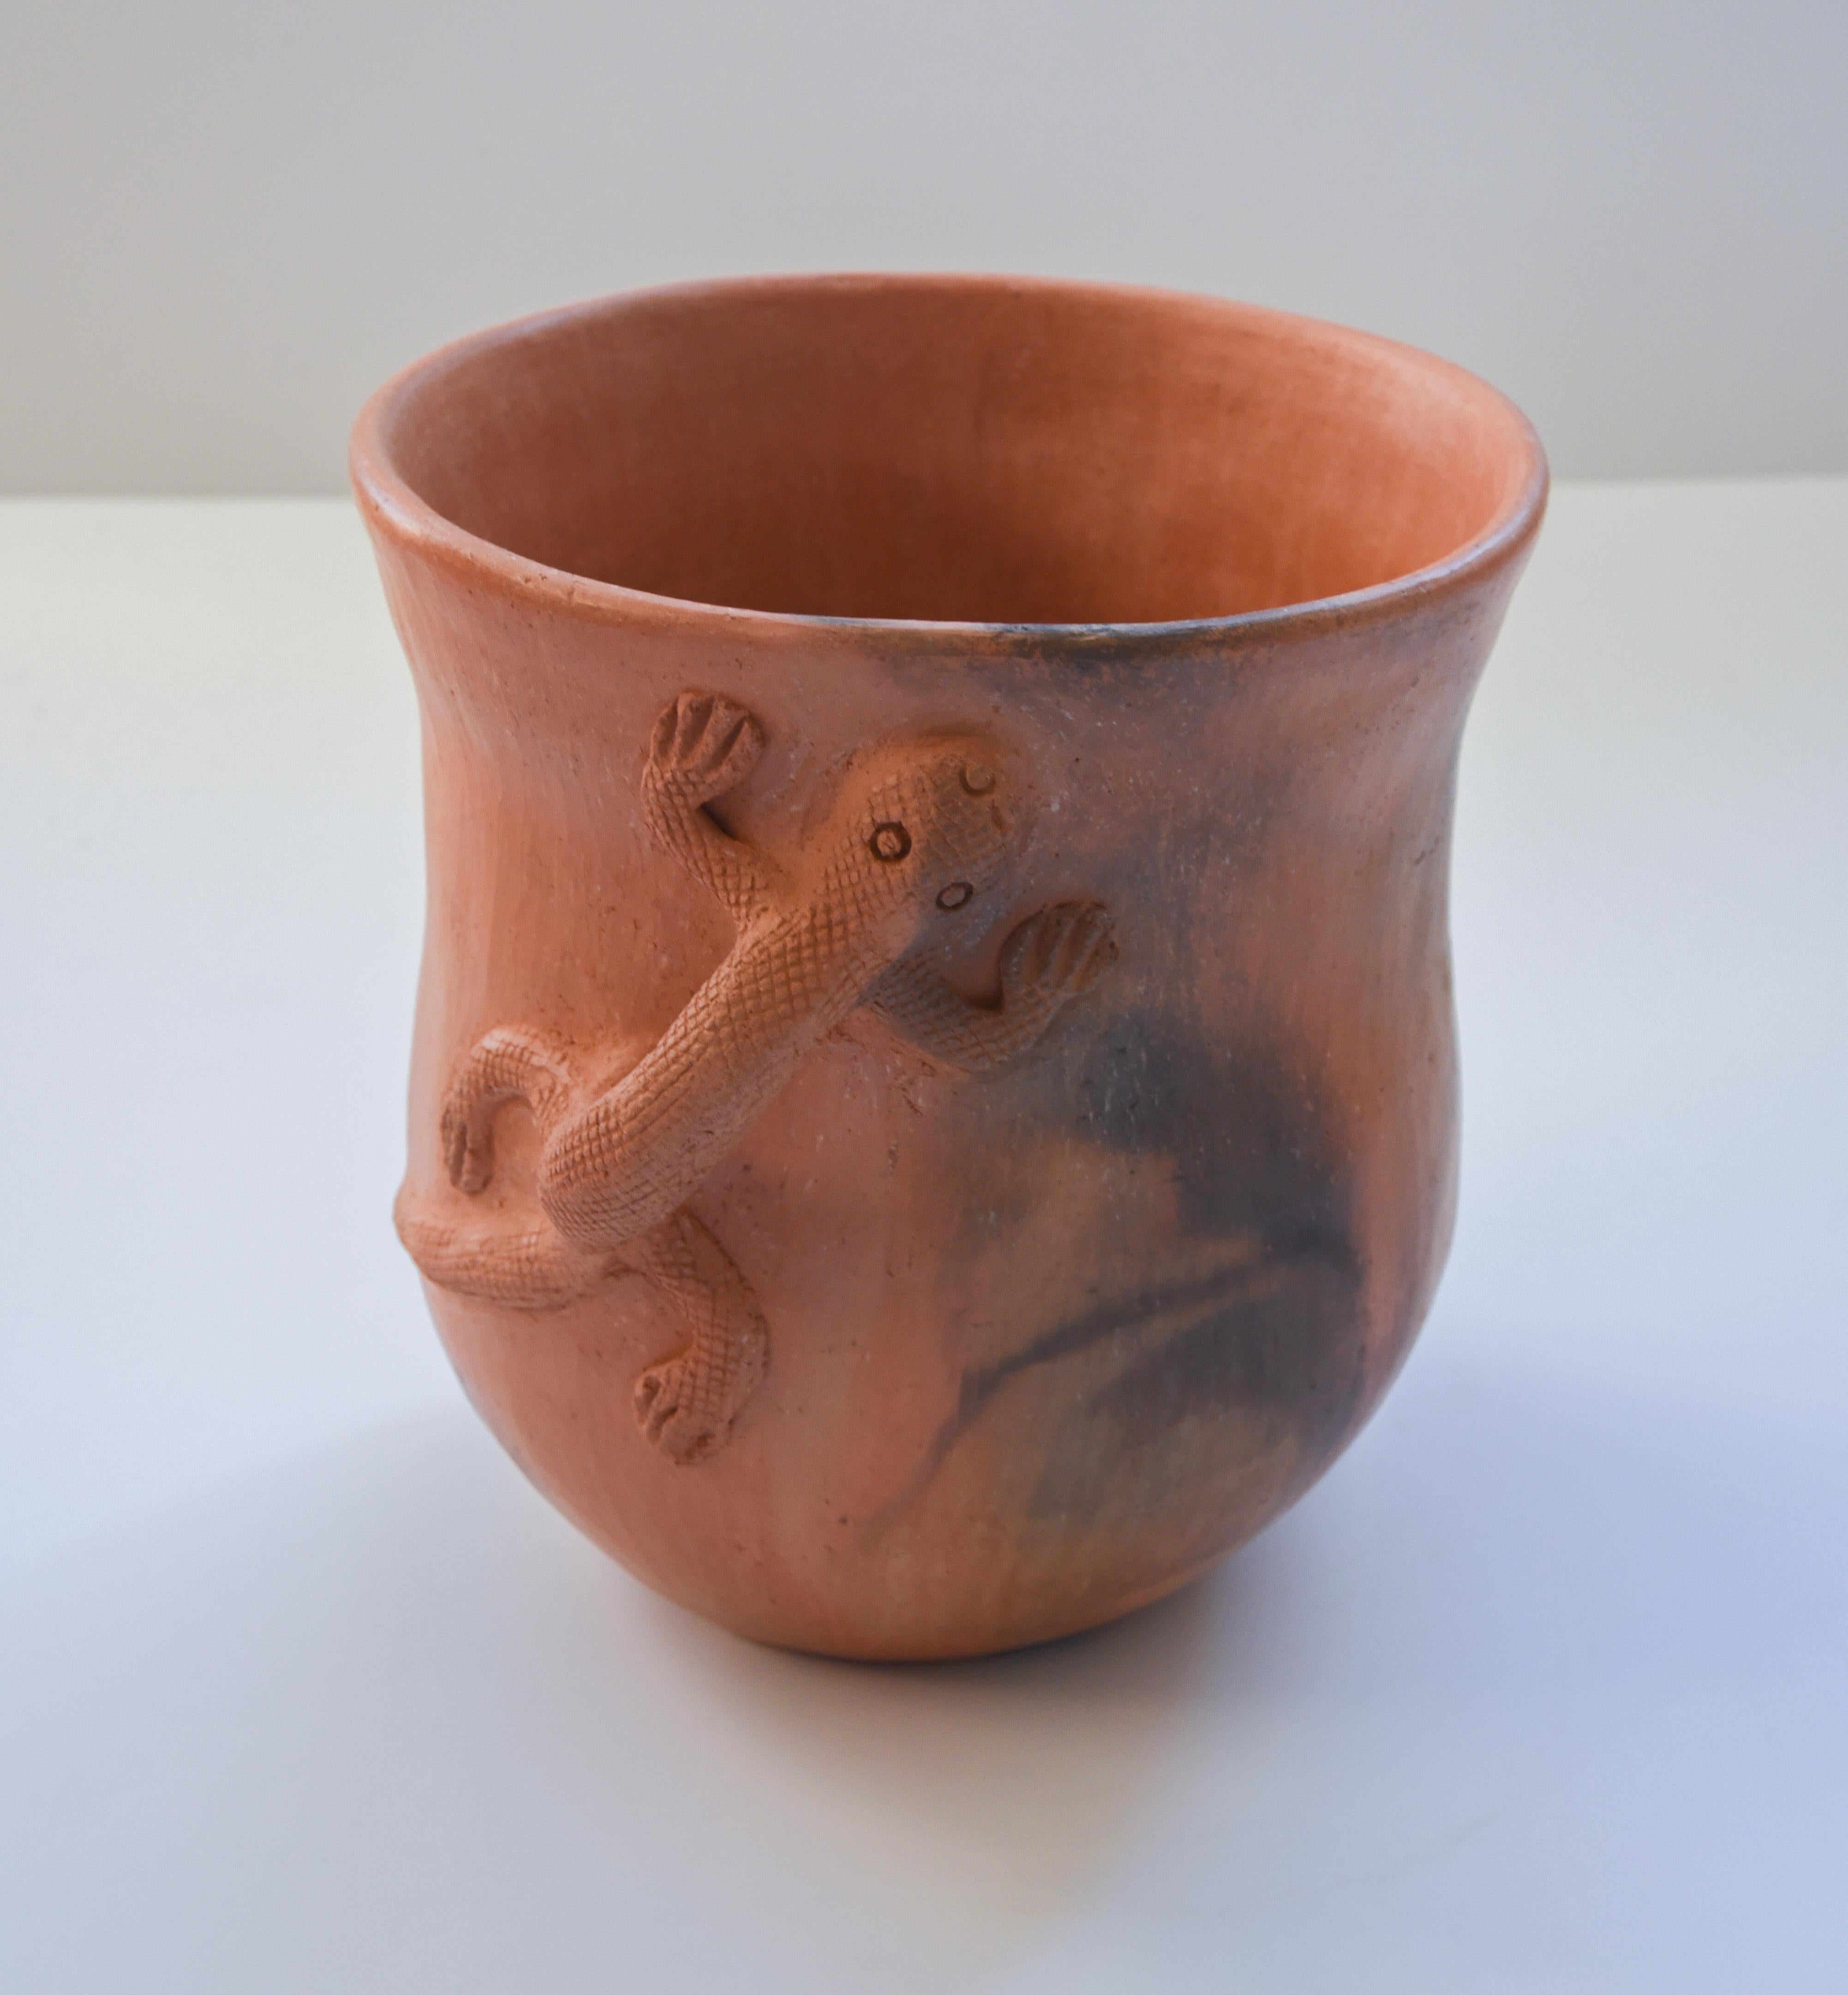 Contemporary Mexican Rustic Pot Folk Art Handmade Ceramic Vessel Terracotta Oaxaca Clay